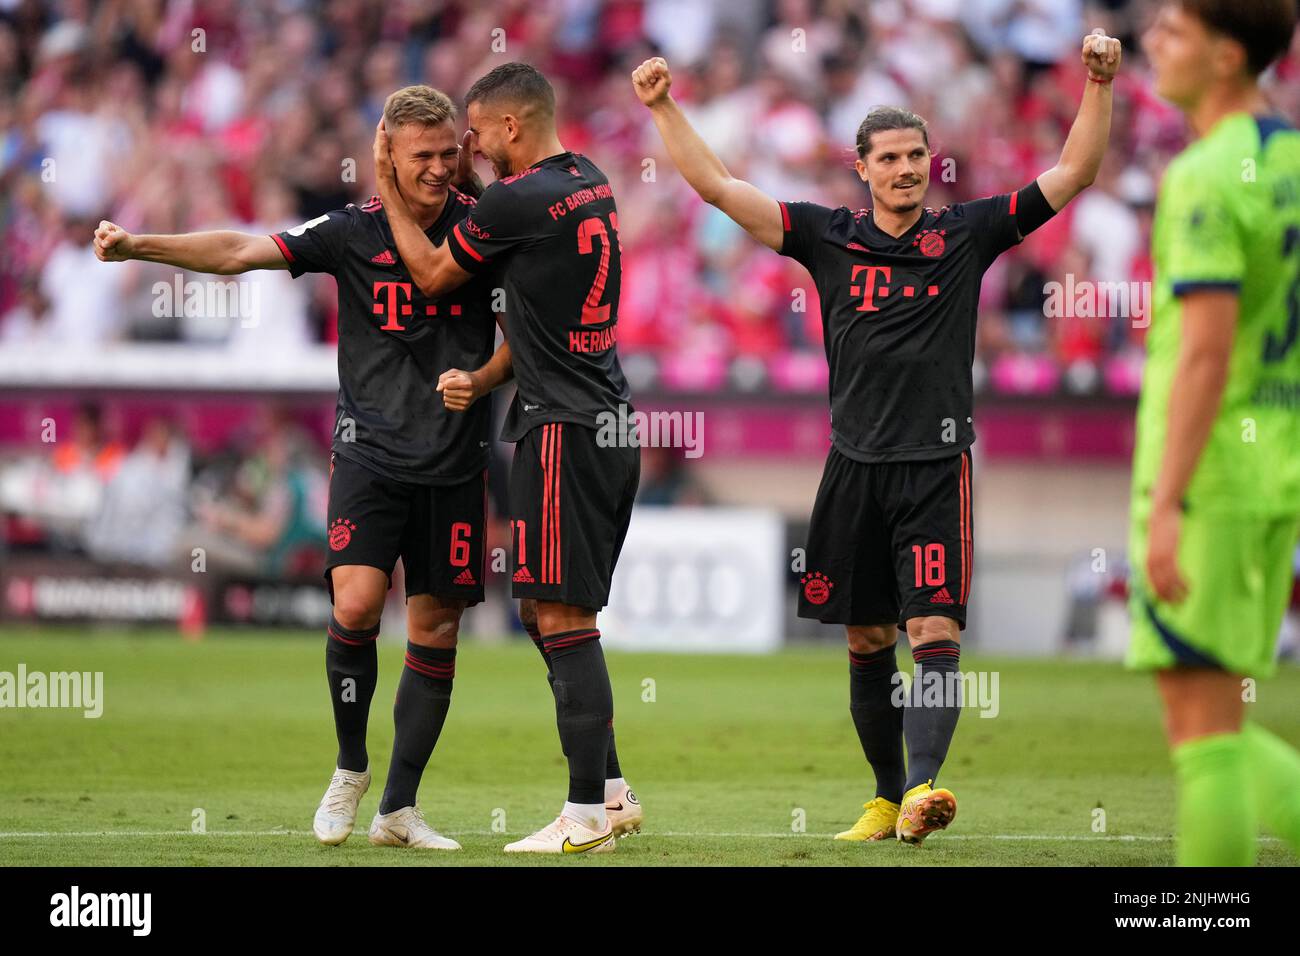 Bayern Munich are 2022/2023 Bundesliga Champions! 🏆 #miasanmia  #bayernmunich #dortmund #kimmich #bundesliga #بايرن_ميونخ #دورتموند…